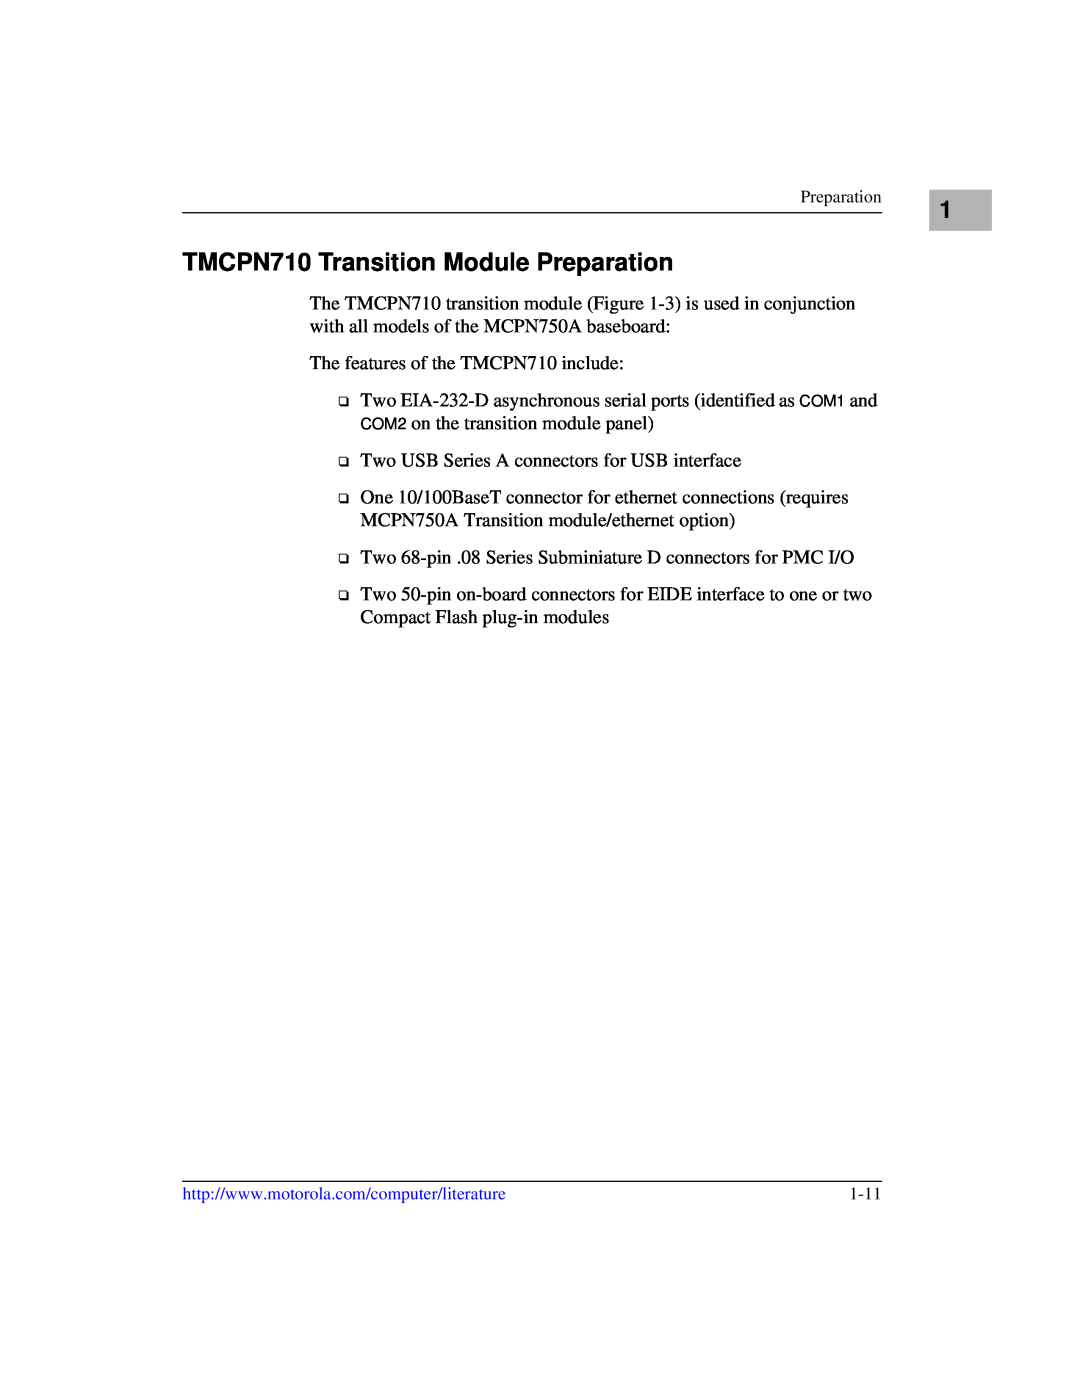 Motorola IH5, MCPN750A manual TMCPN710 Transition Module Preparation 